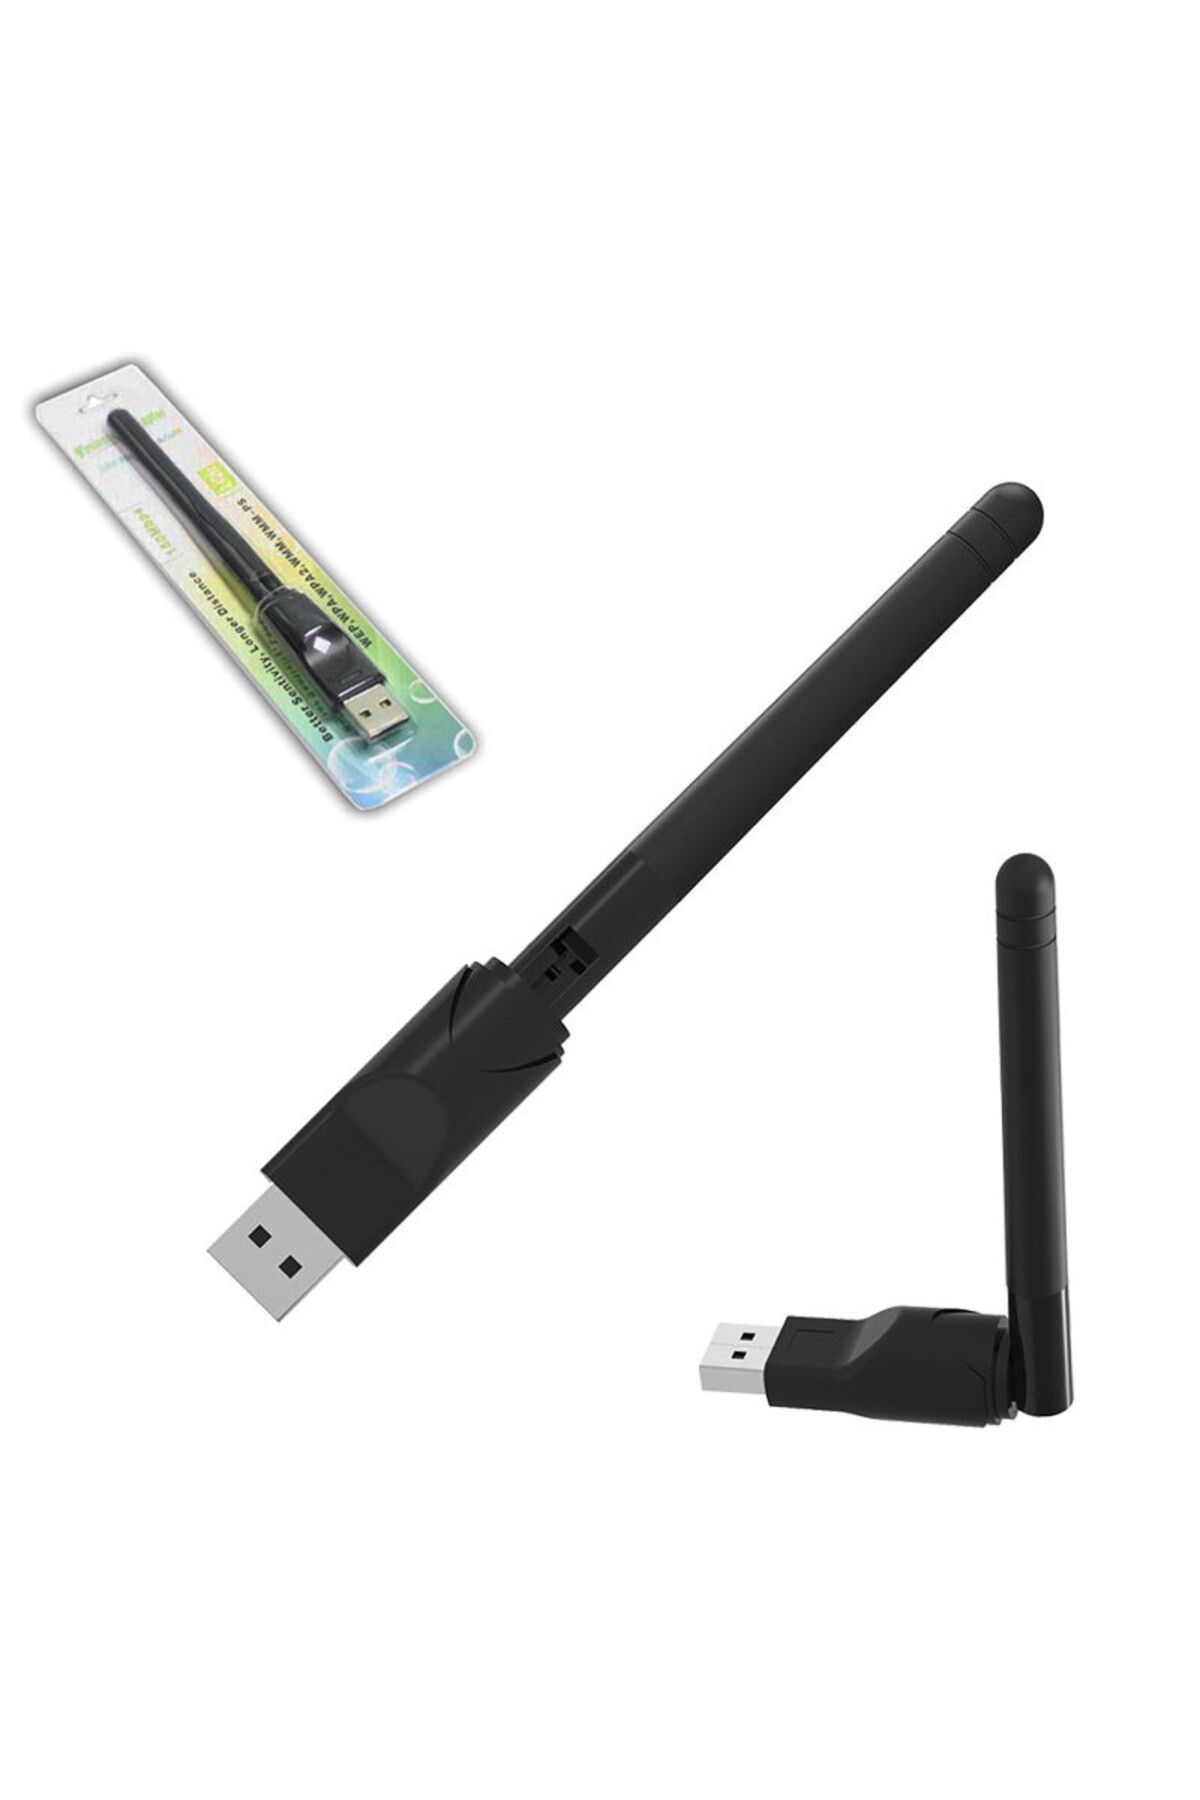 A-Link Ralink RT5370 Kali Linux Wi-Fi Adaptör USB Monitor Mode